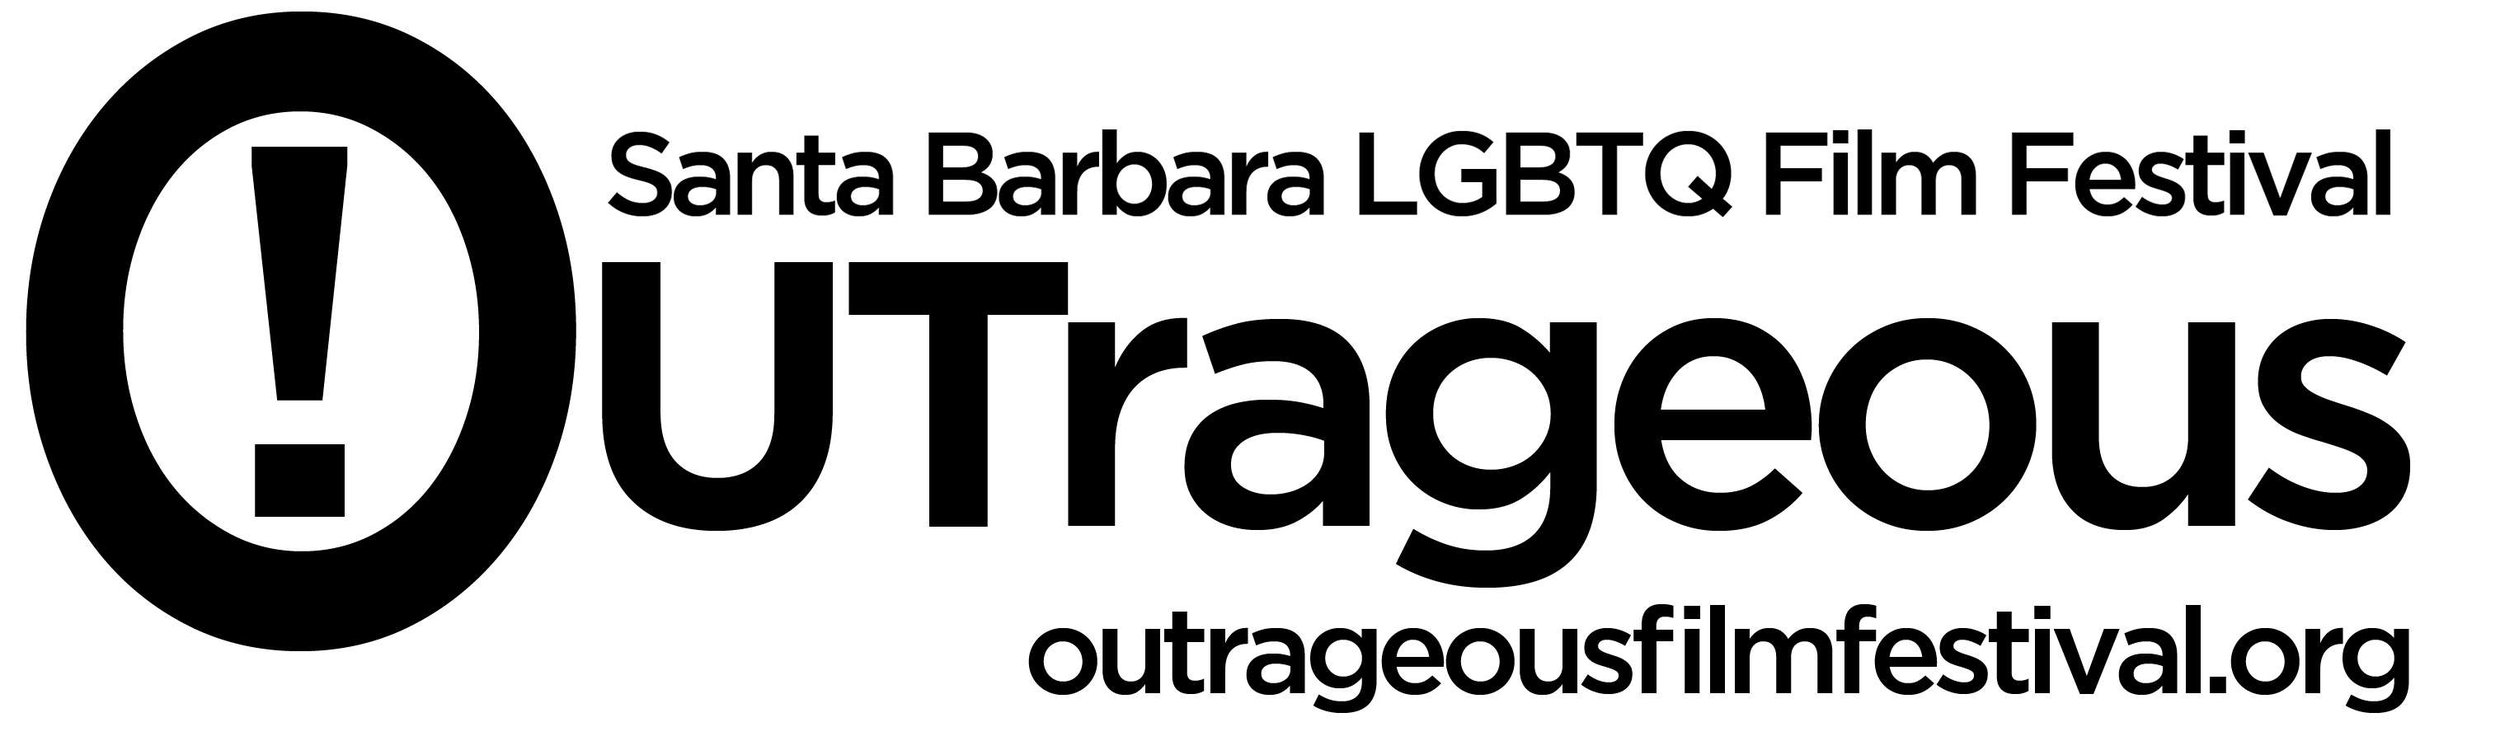 Santa Barbara LGBTQ Film Festival